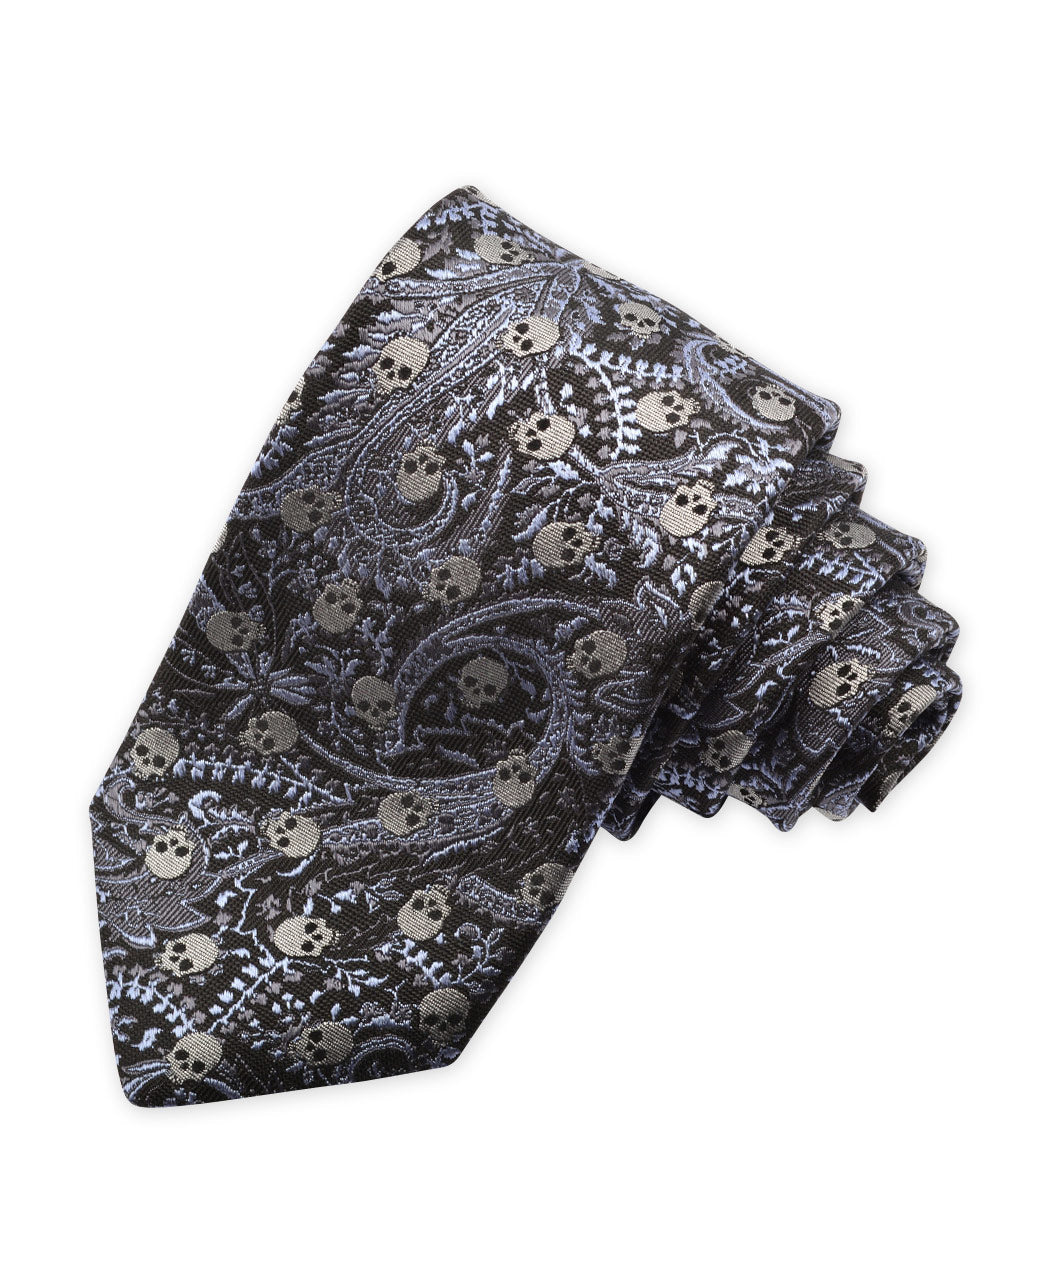 Westport Black Paisley Skull Tie, Men's Big & Tall